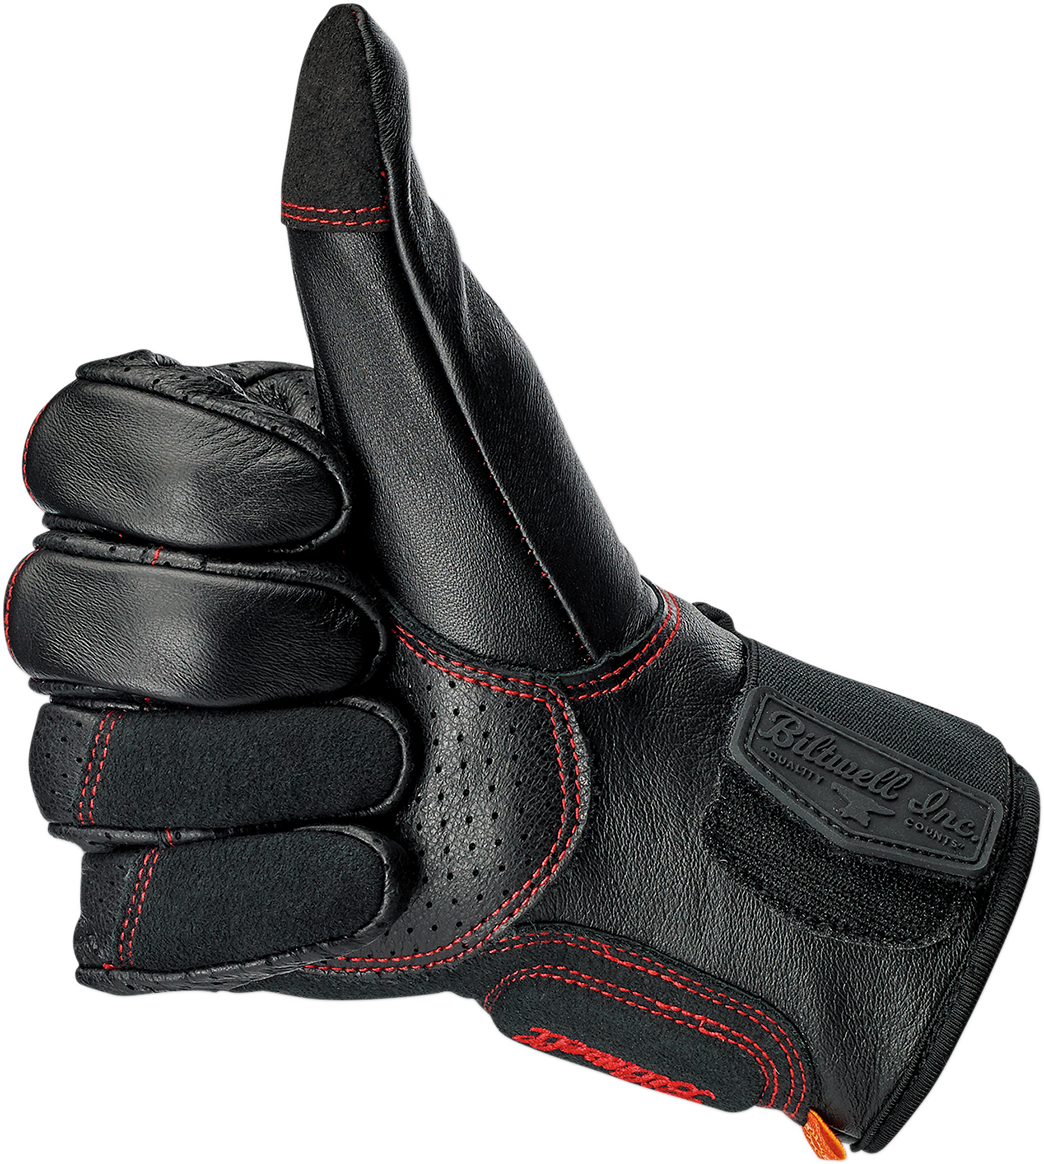 BILTWELL Borrego Gloves - Redline - XL 1506-0108-305